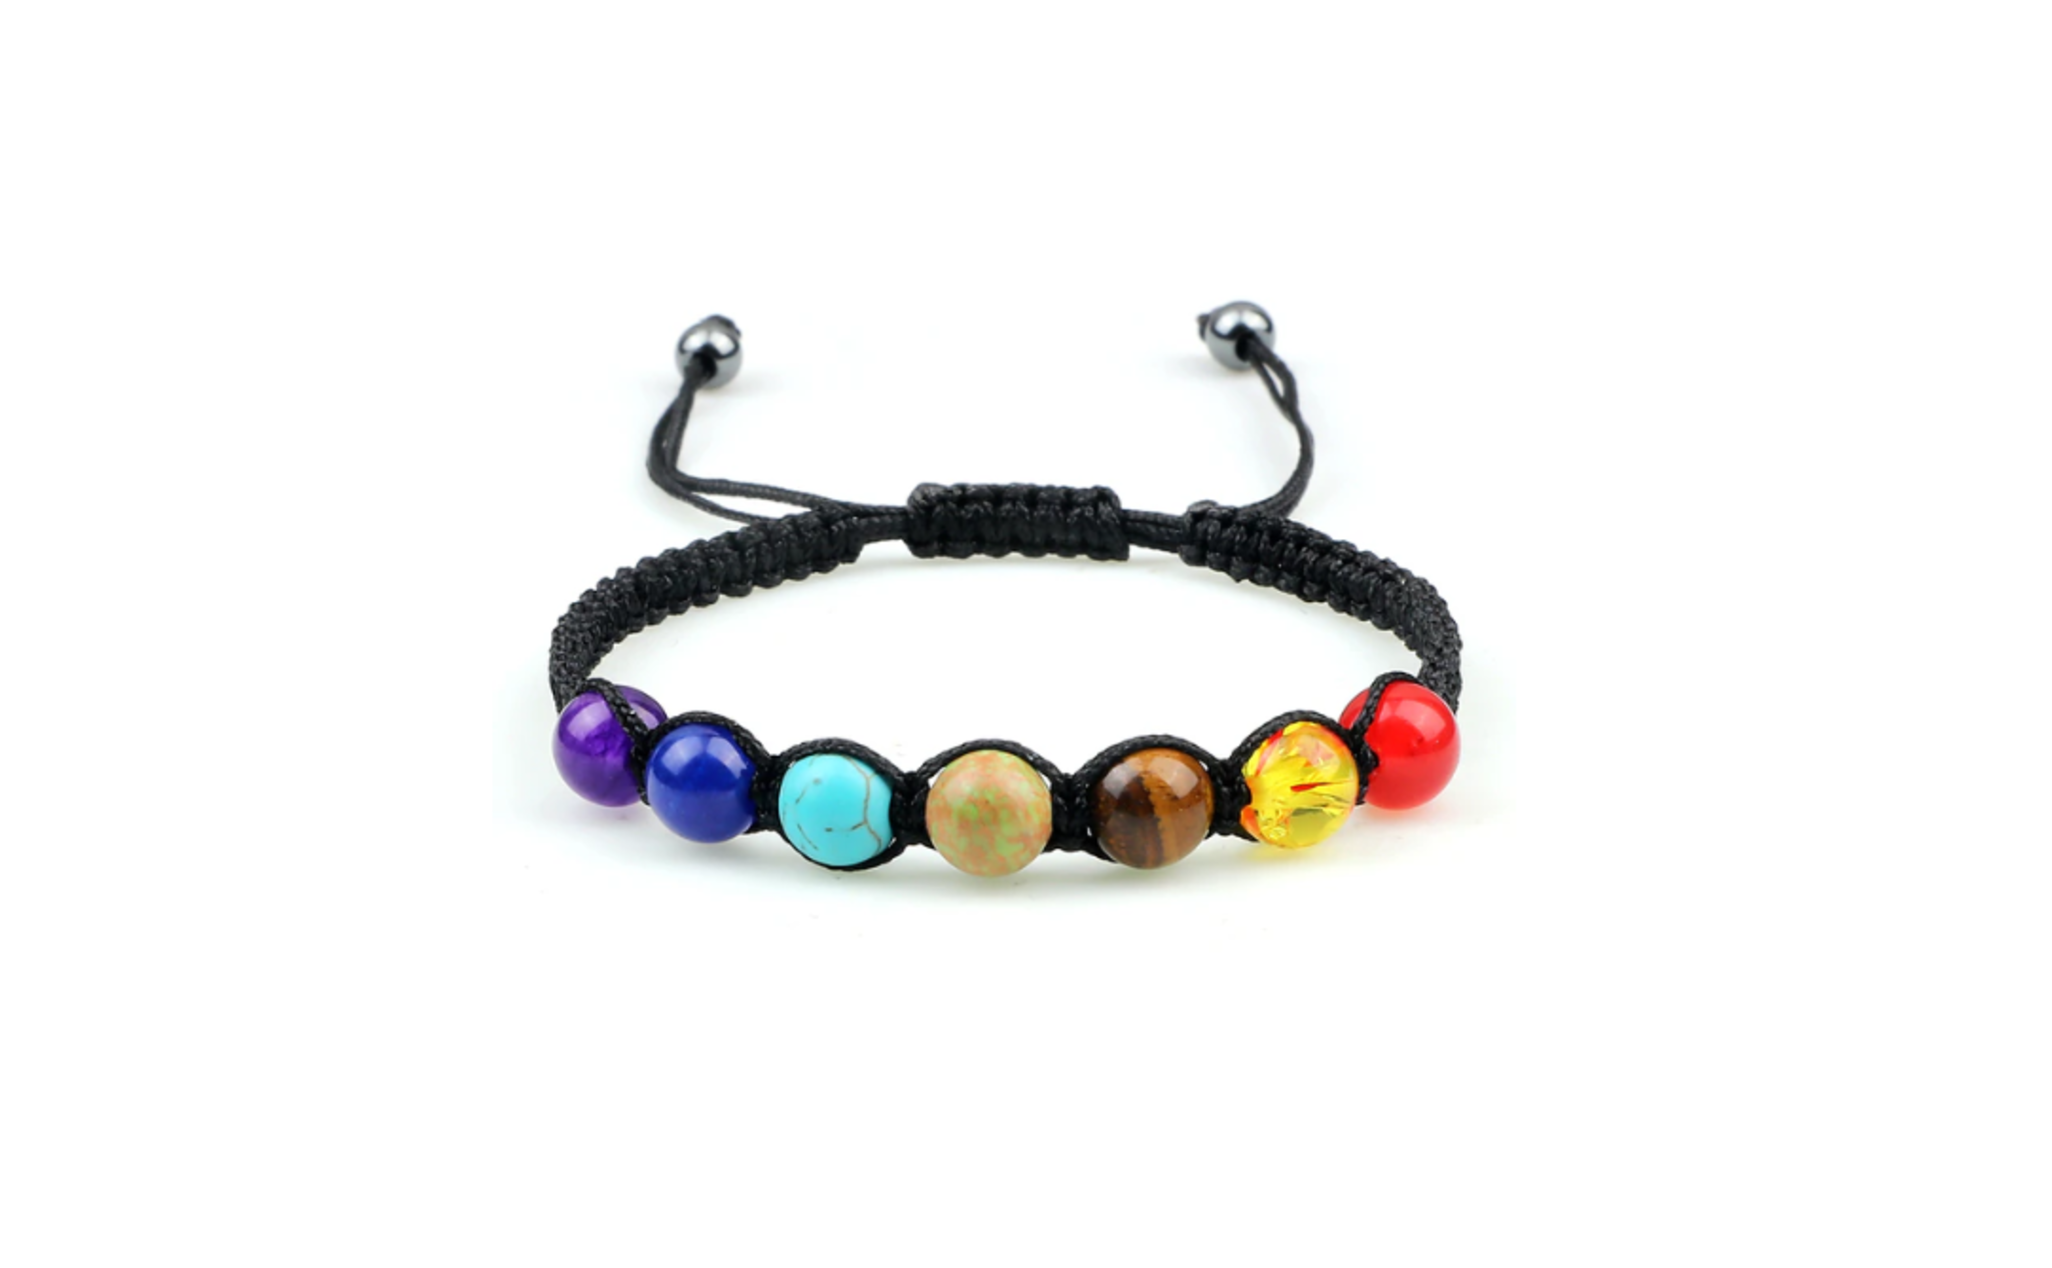 Braided 7 Chakra Beads Yoga Bracelet